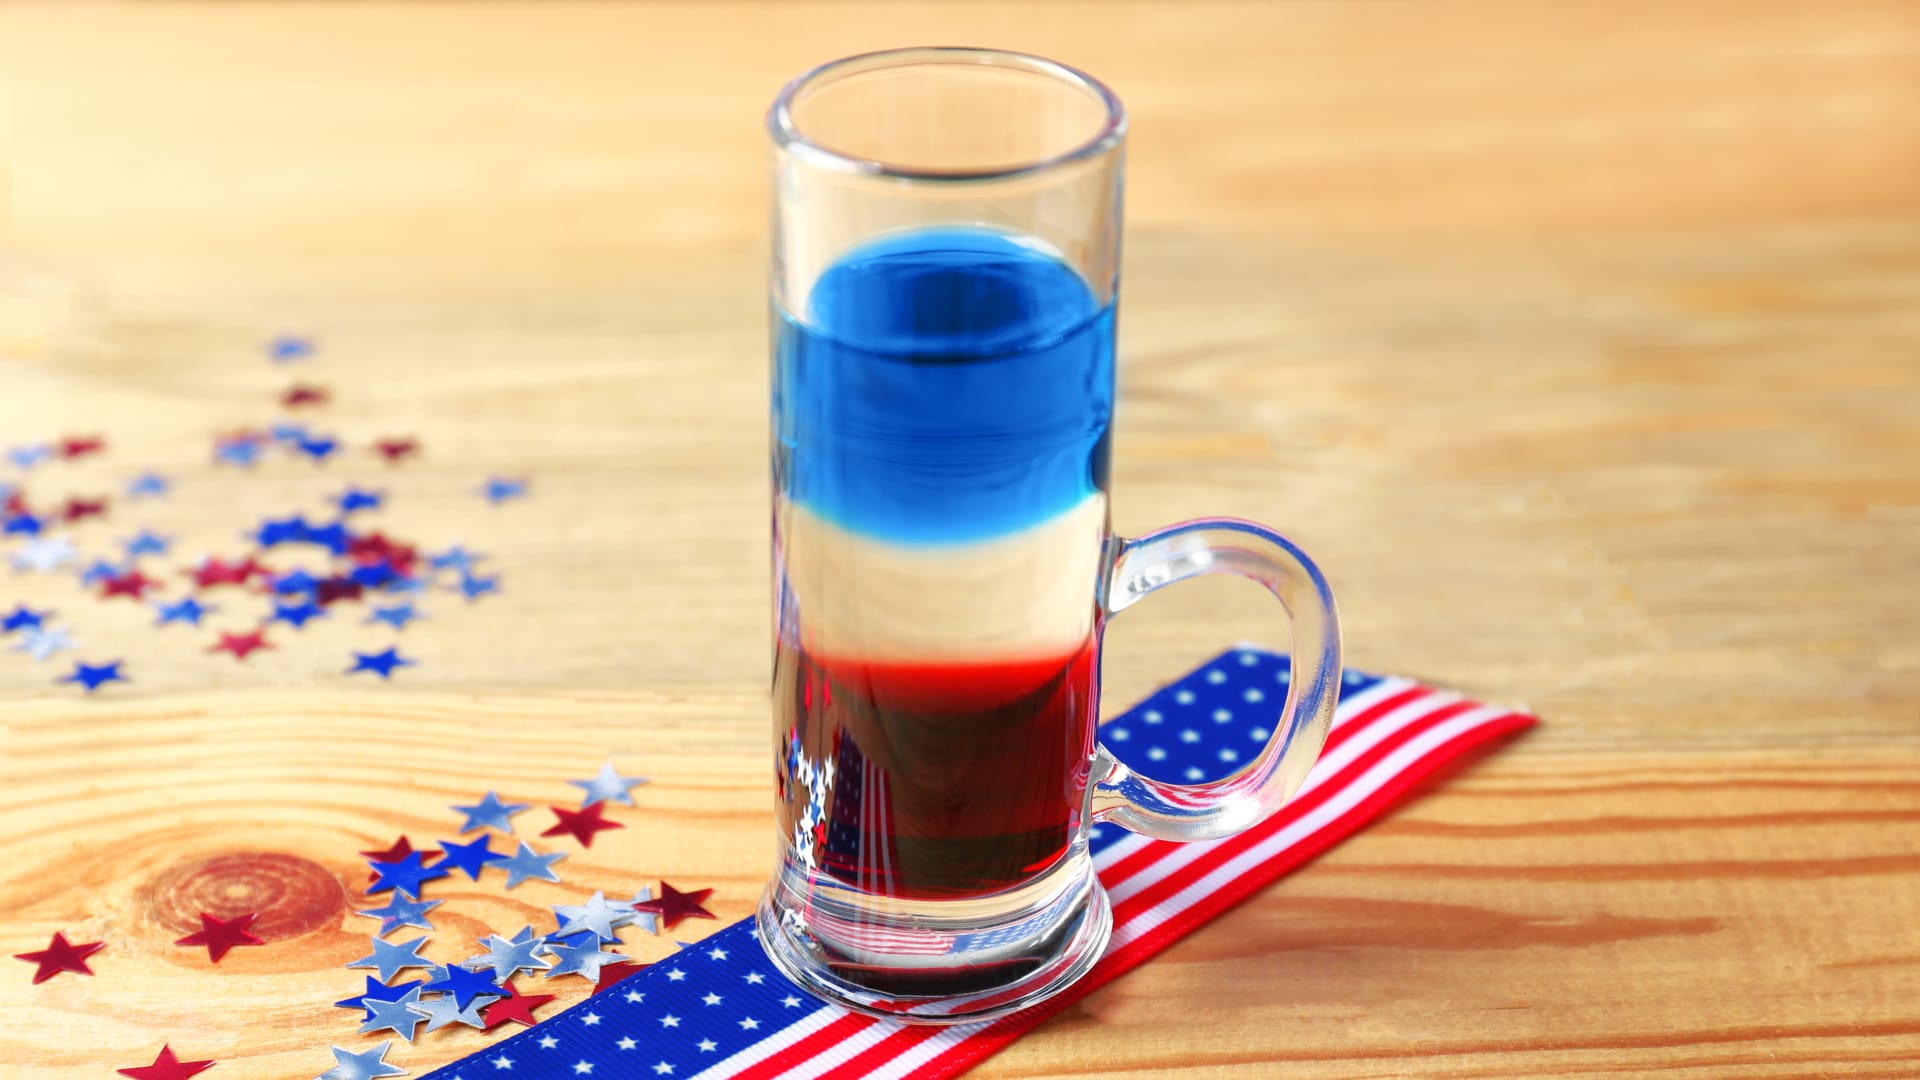 The Patriot drink recipe